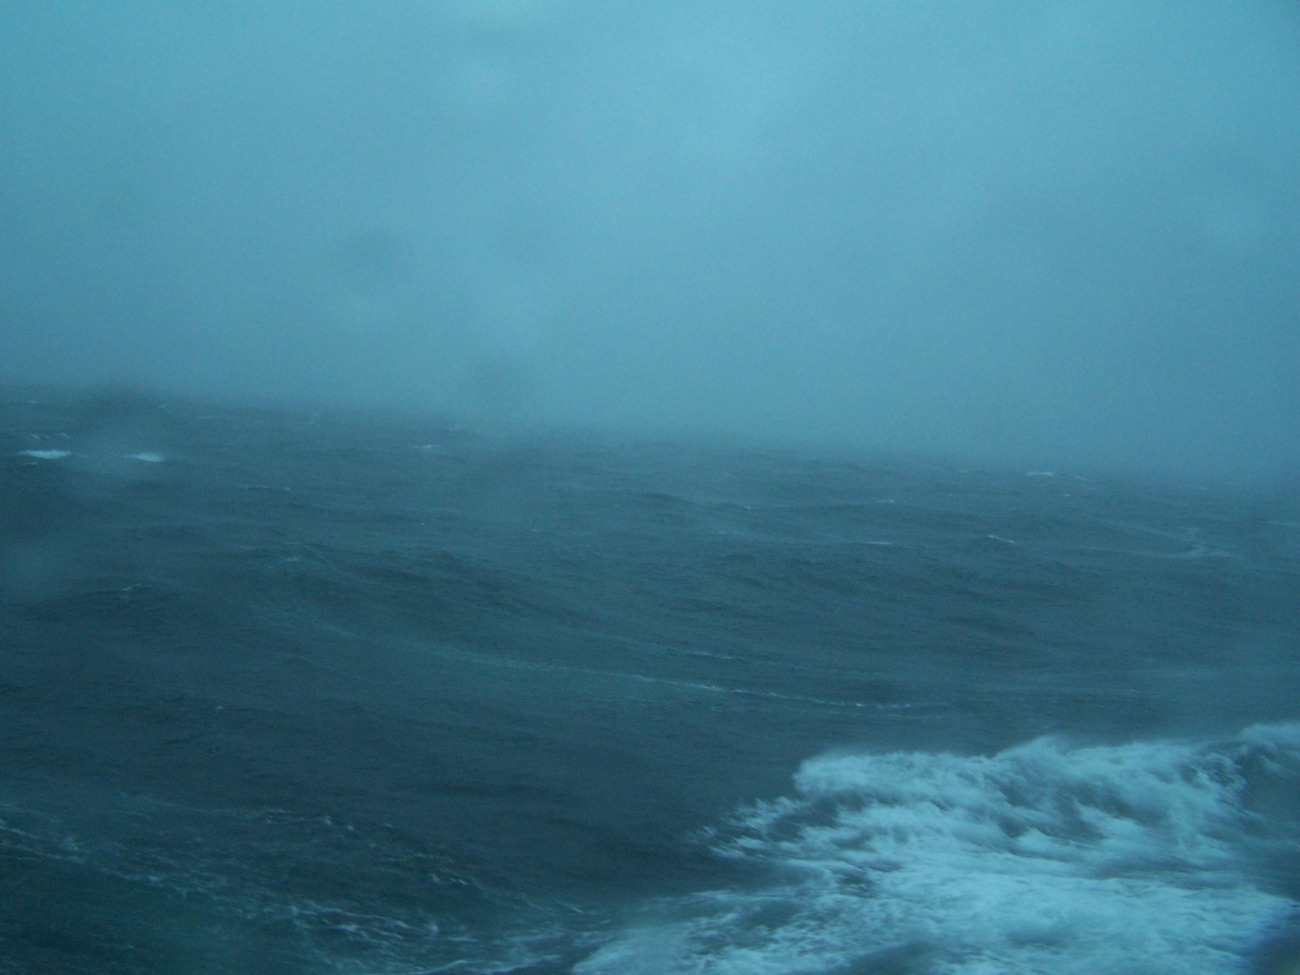 Riding out Tropical Storm Alberto on the NOAA Ship THOMAS JEFFERSON